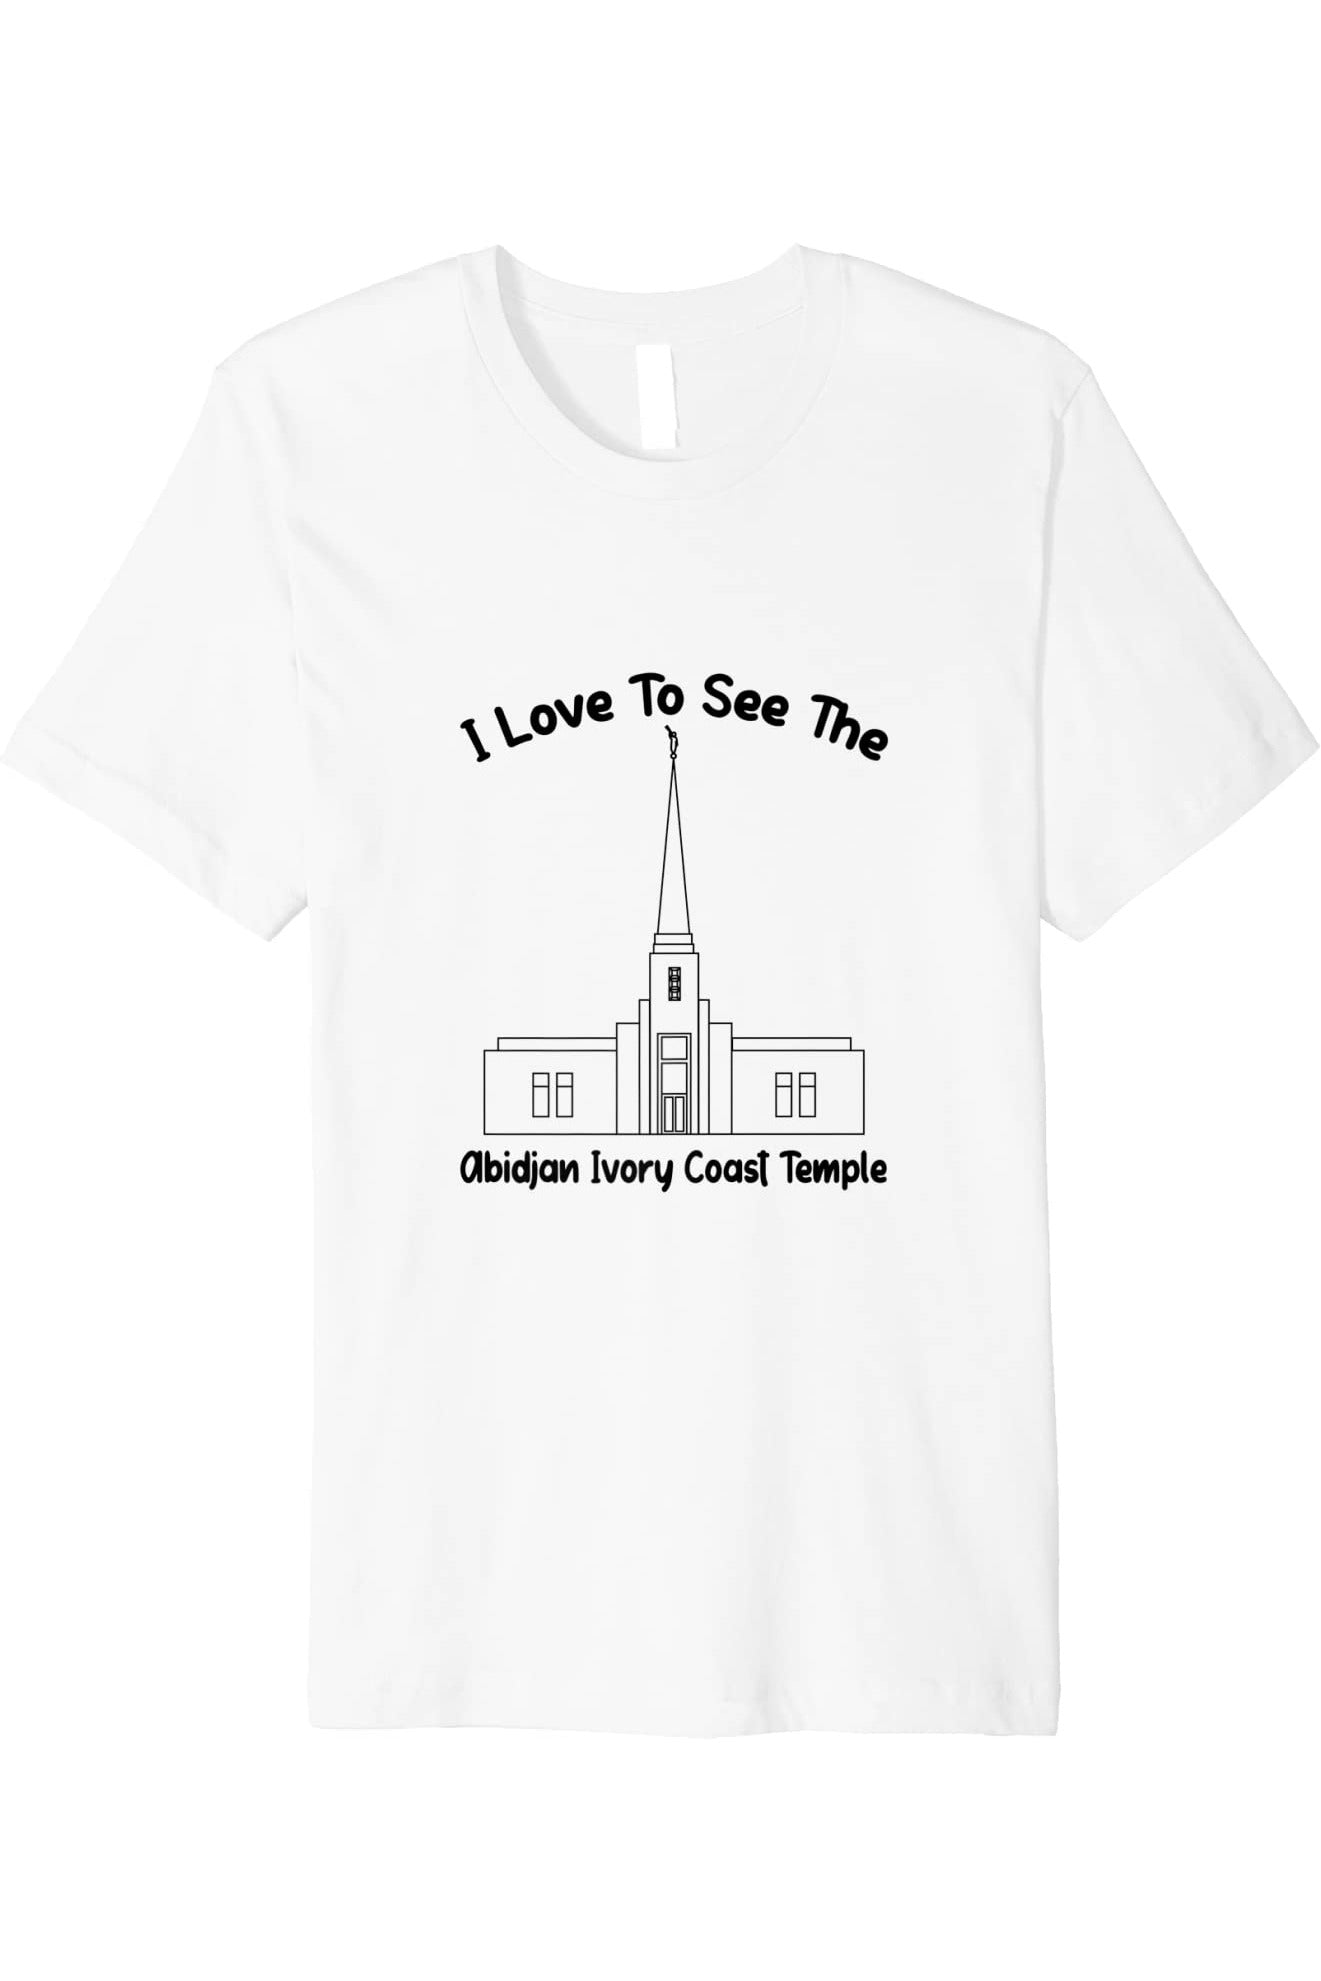 Abidjan Ivory Coast Temple T-Shirt - Premium - Primary Style (English) US